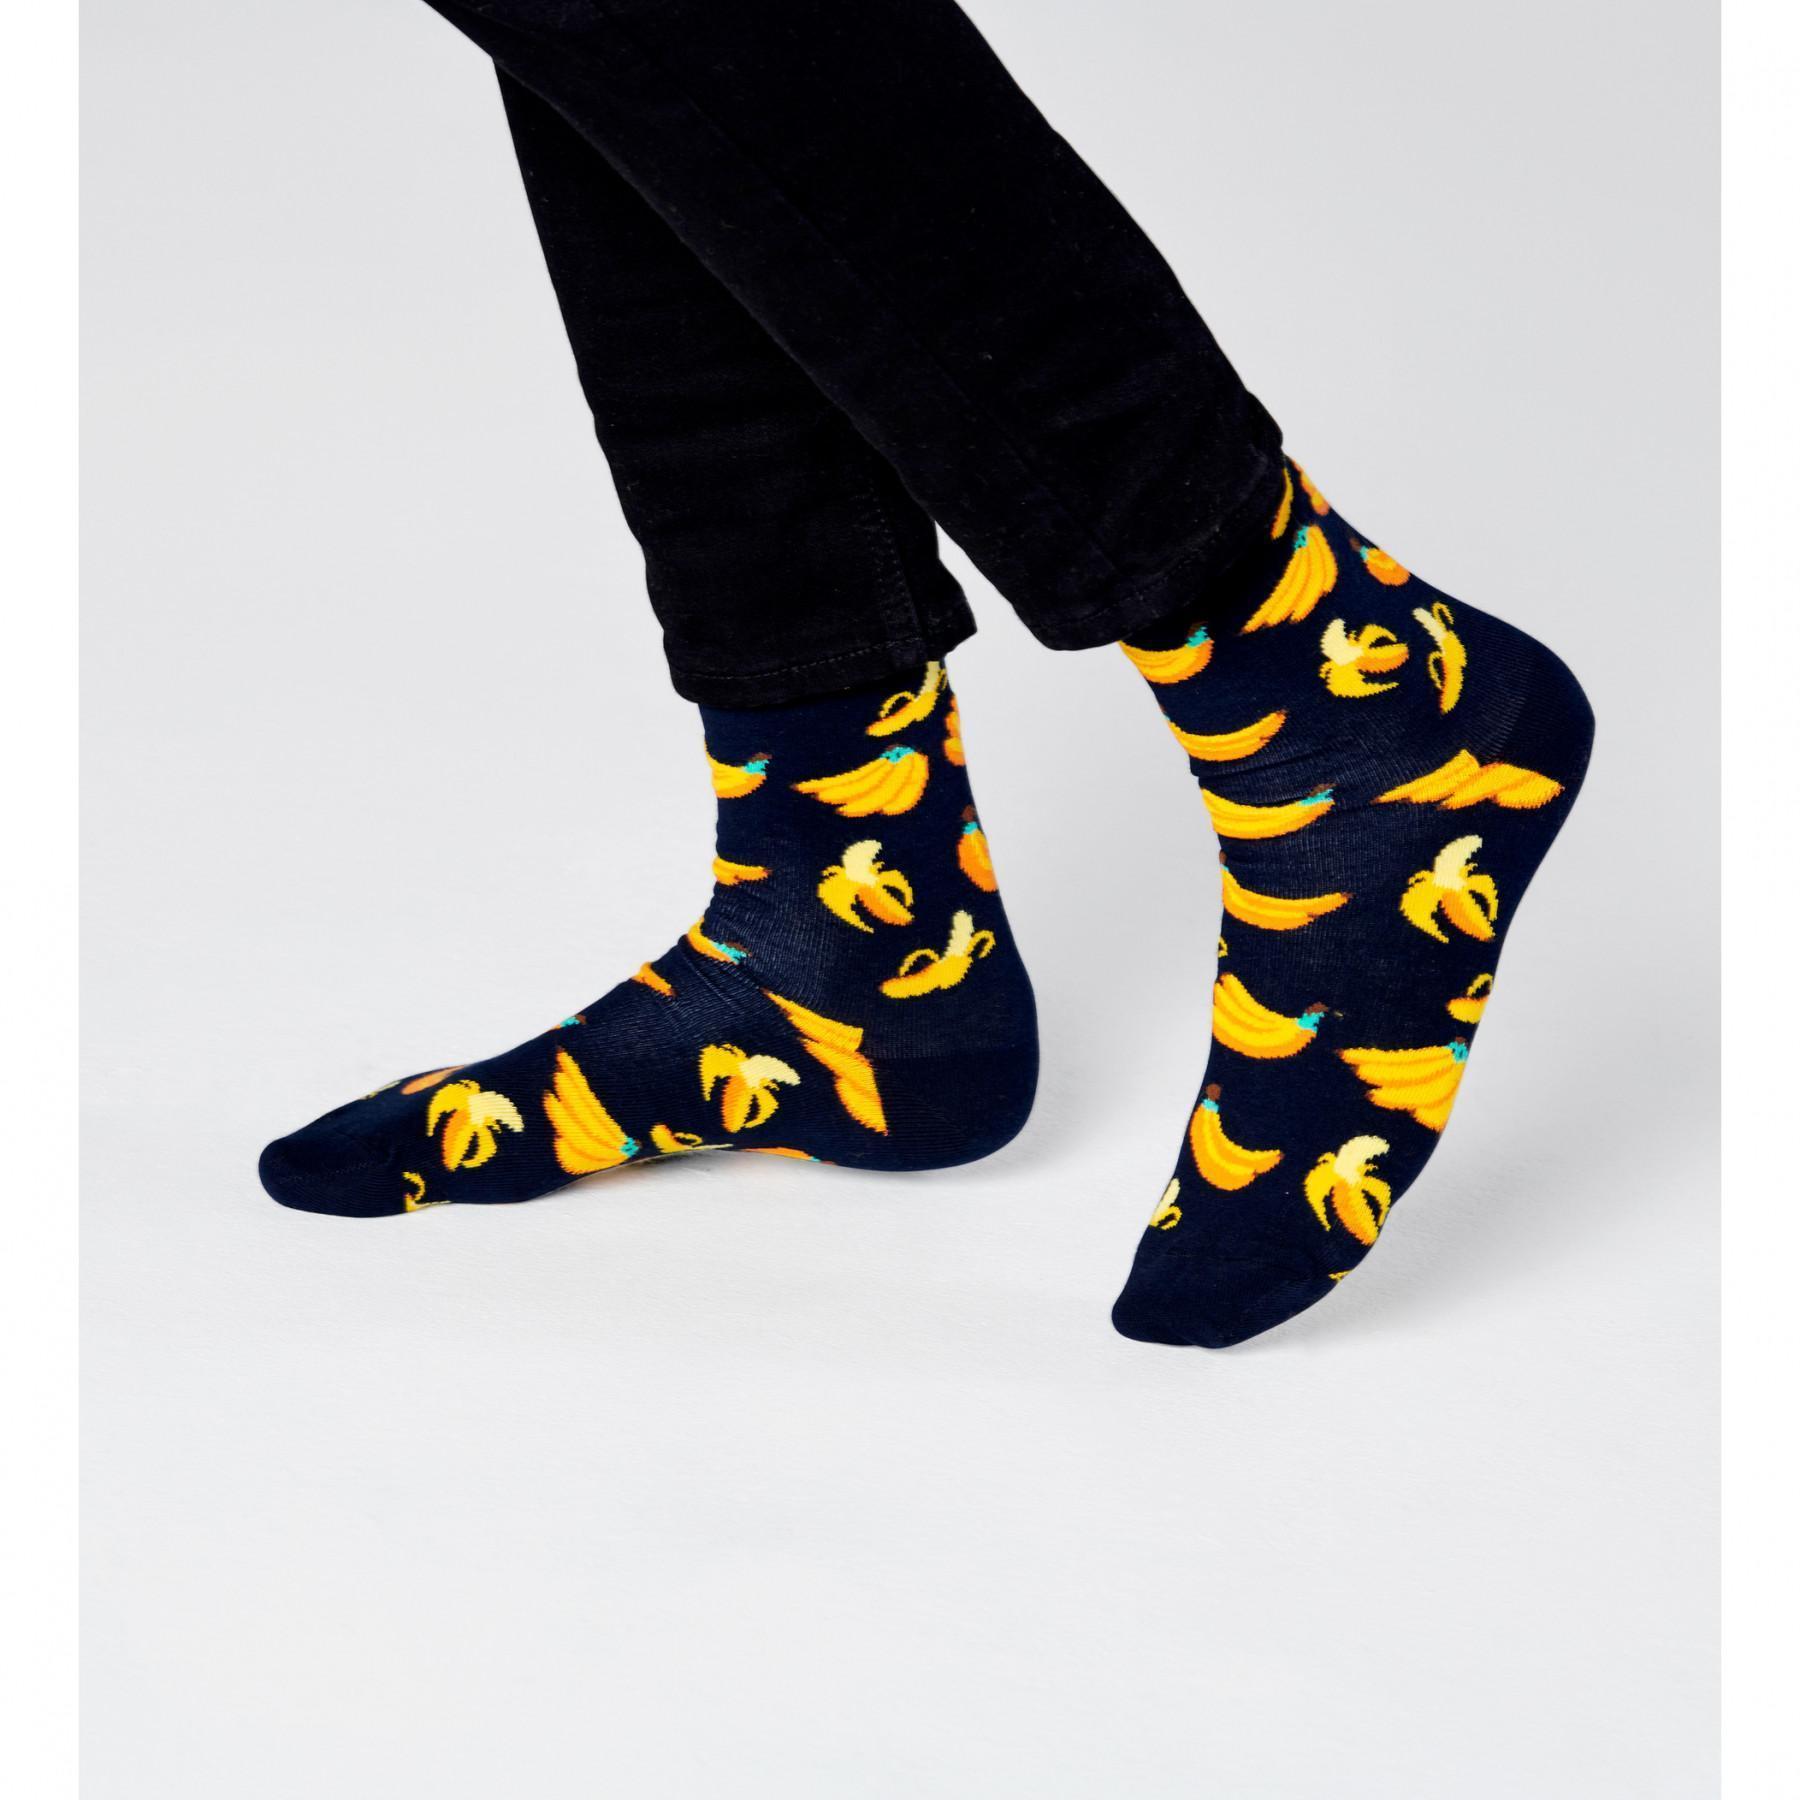 Socken Happy Socks Banana